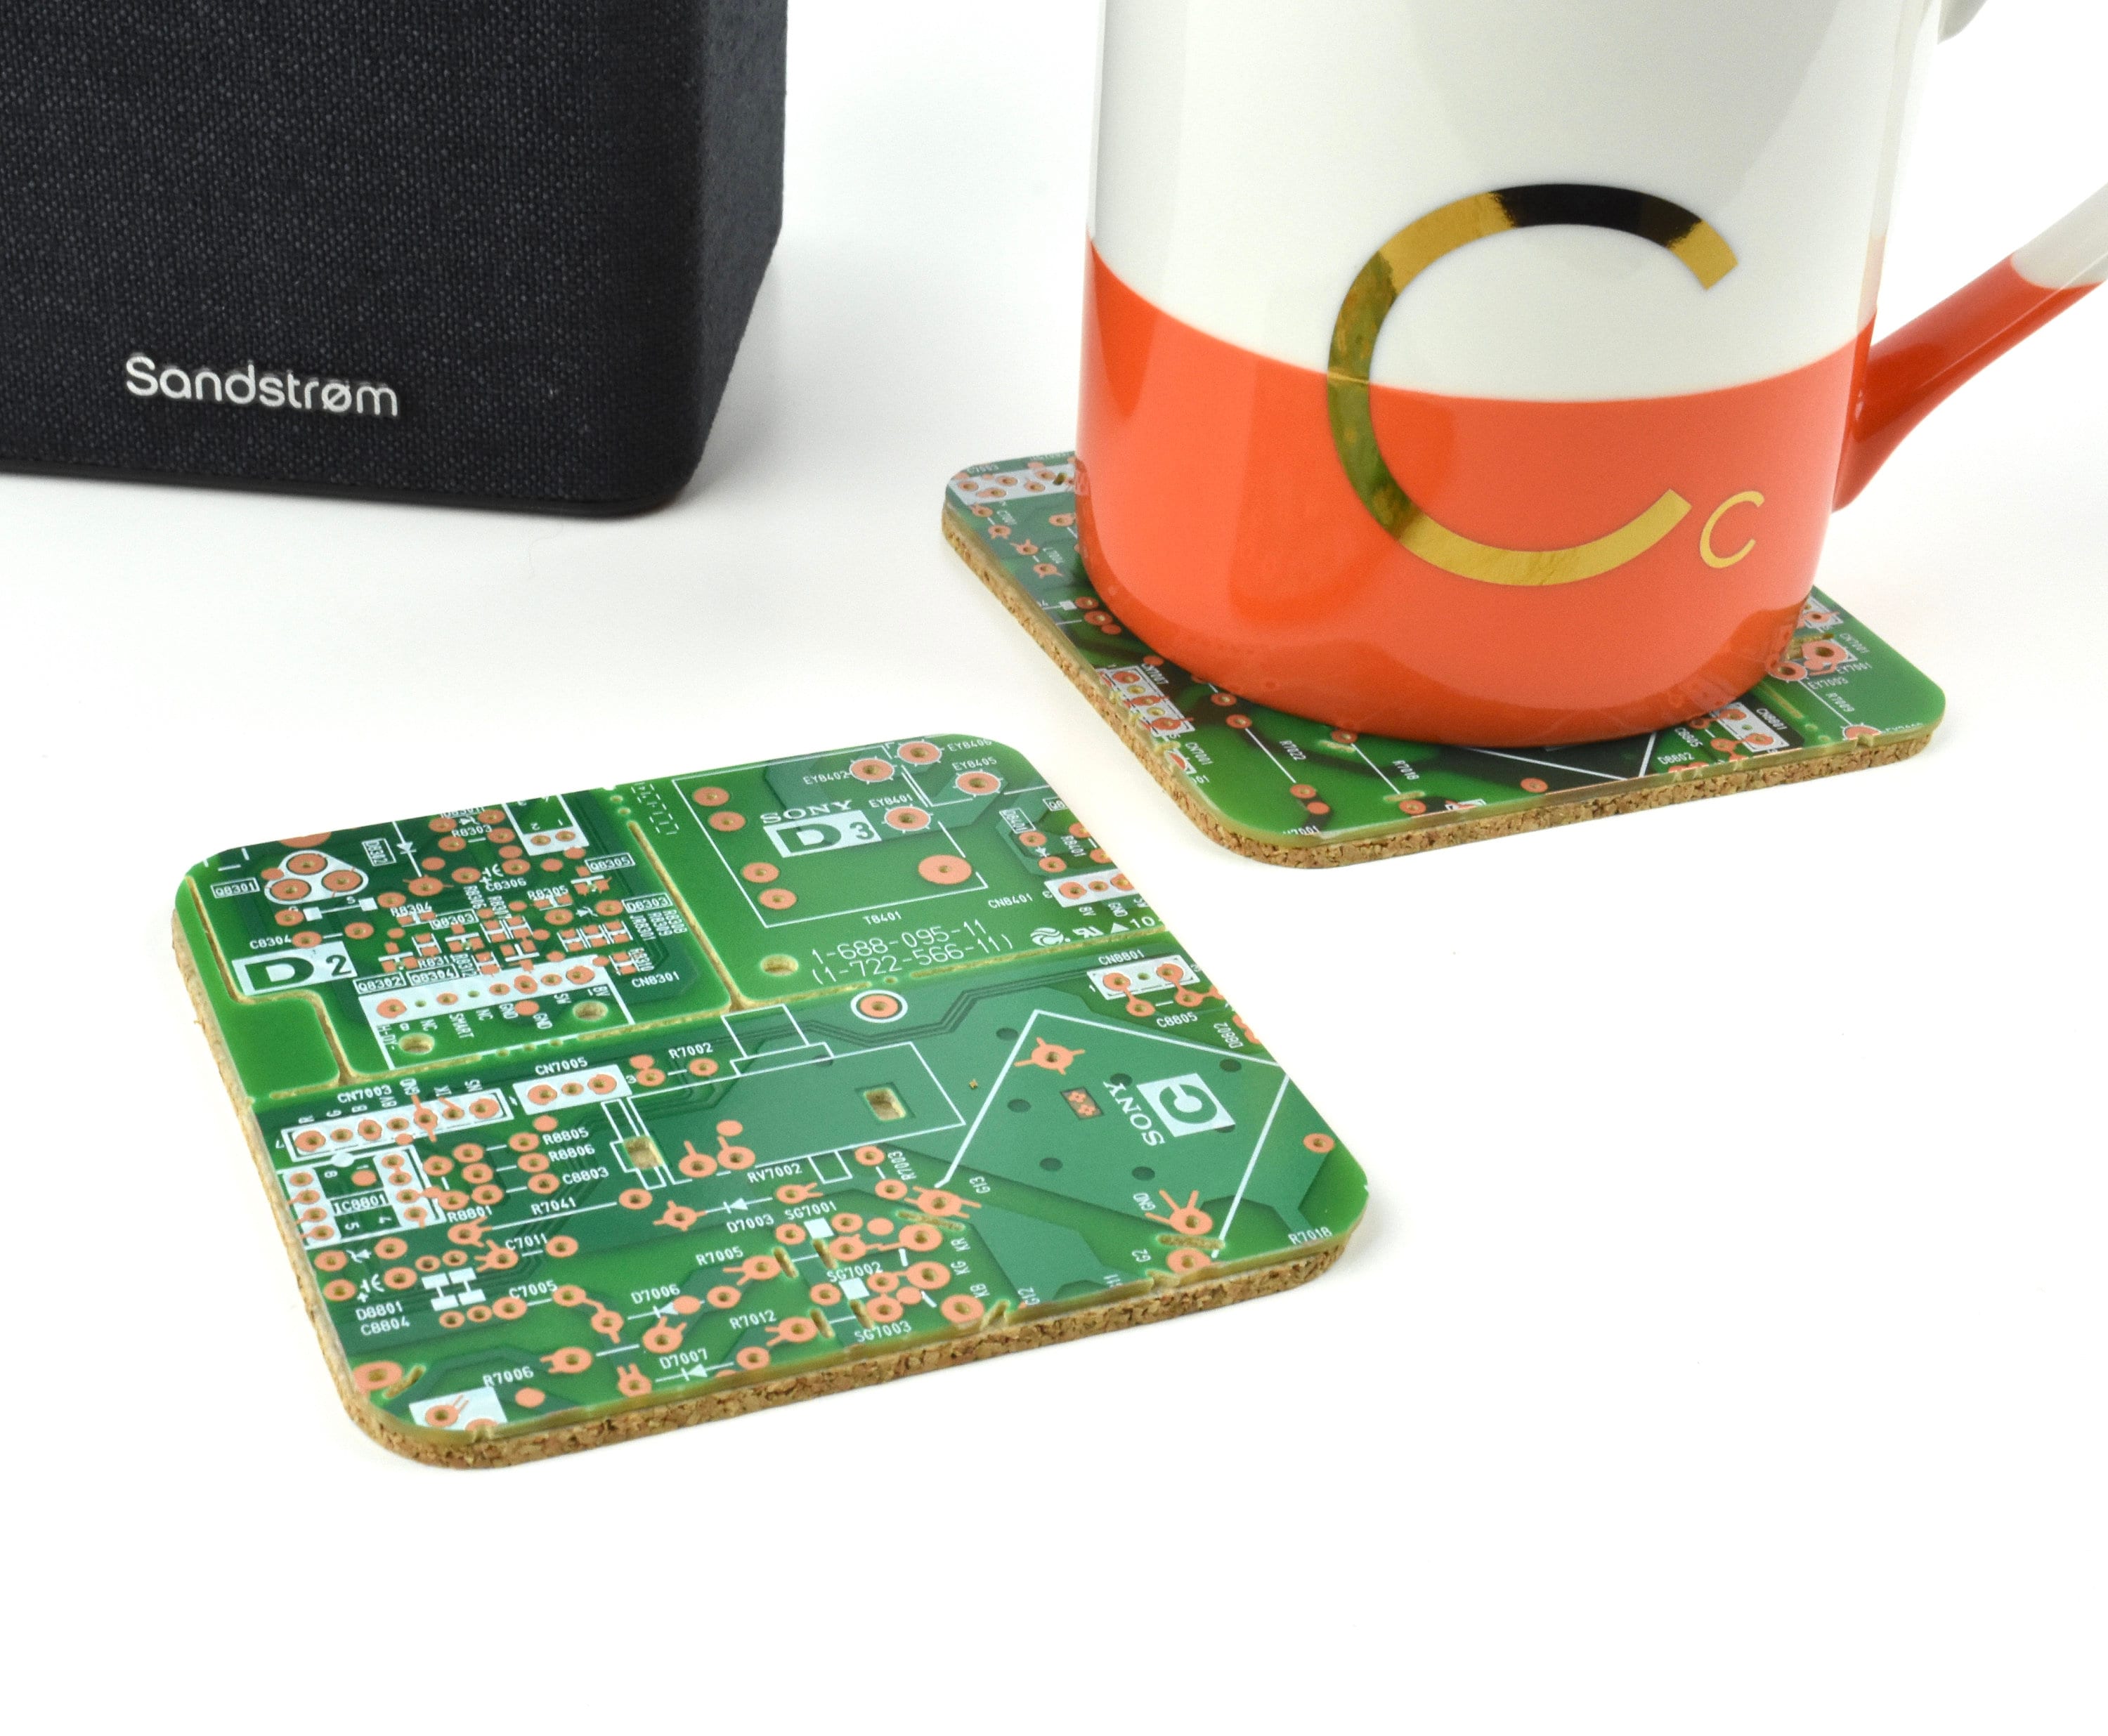 Circuit Board Coaster Computer Geek Gift Office Desk Decor Software Developer Gifts Transparent Engraved Coaster